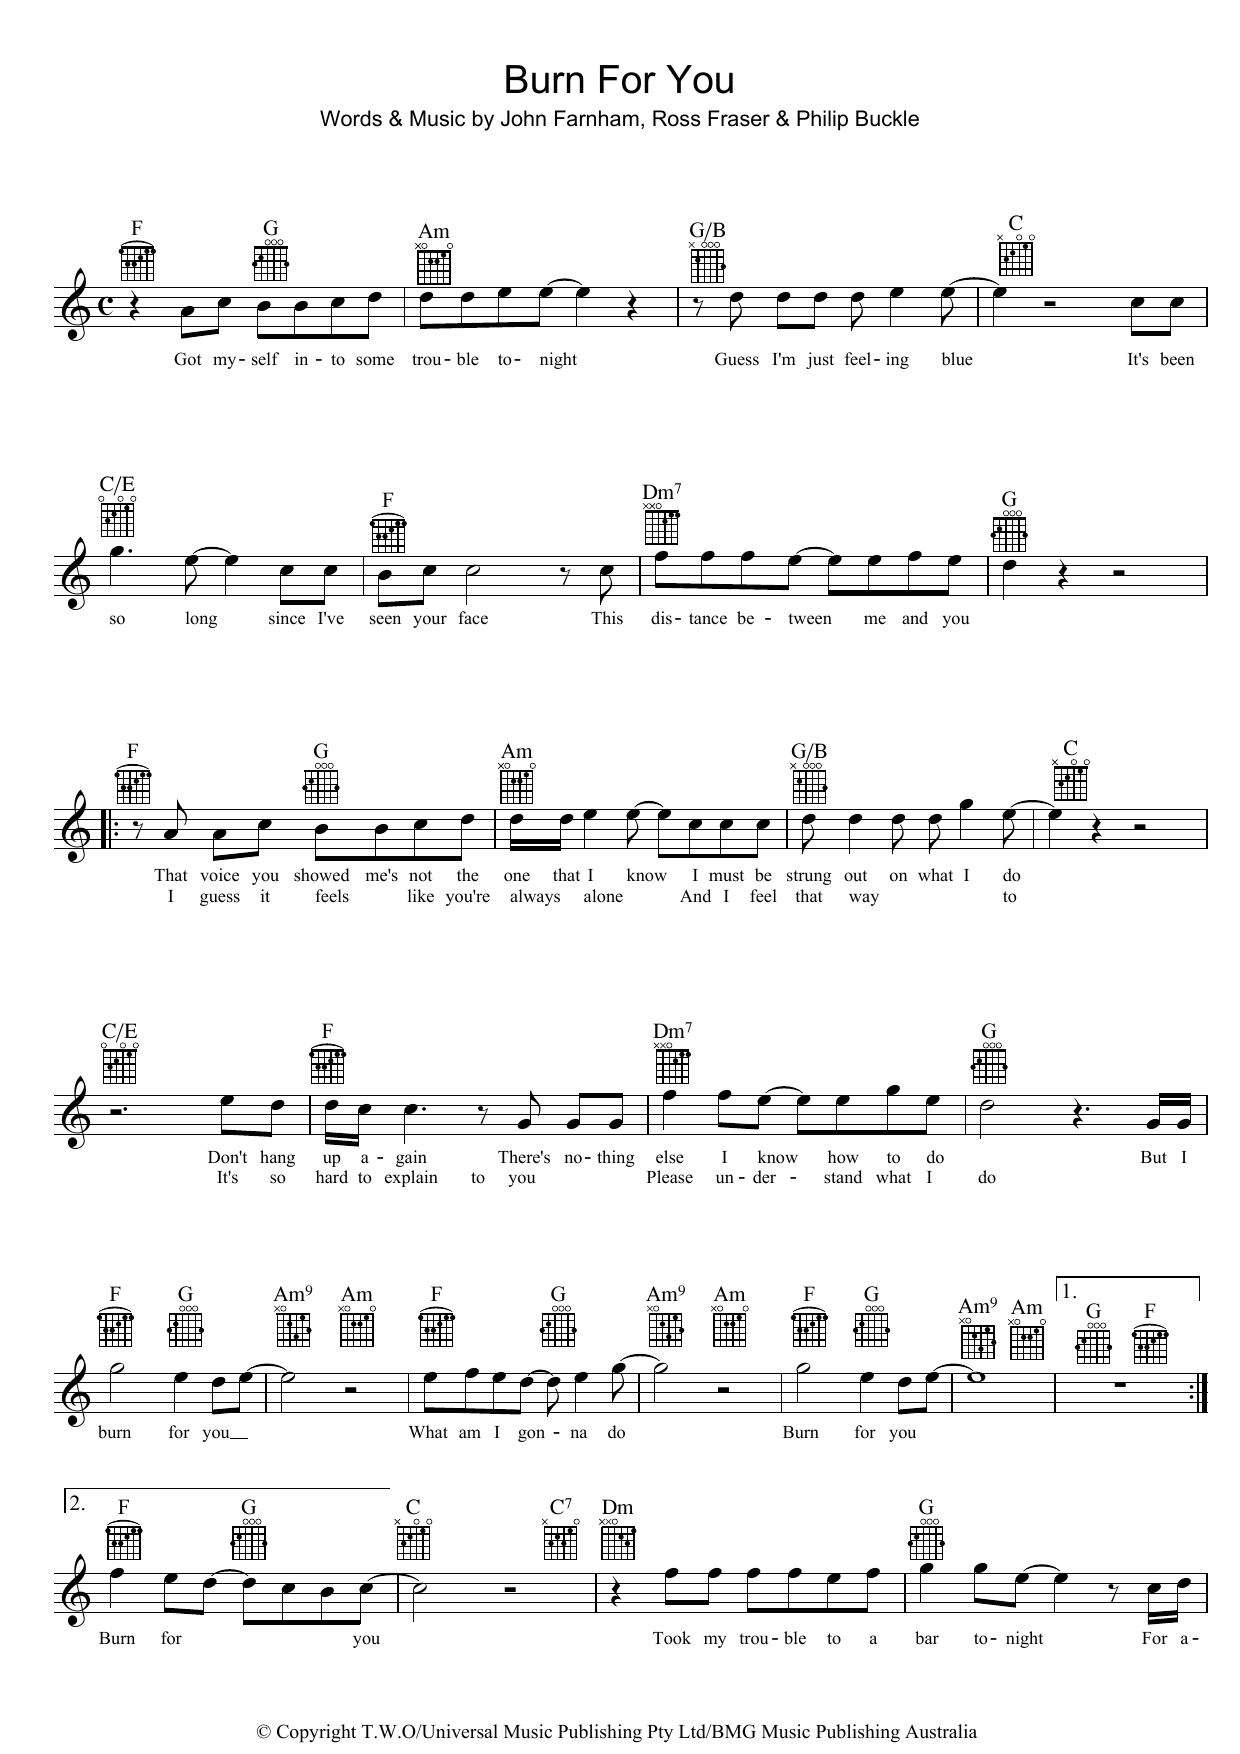 John Farnham Burn For You Sheet Music Notes & Chords for Ukulele - Download or Print PDF